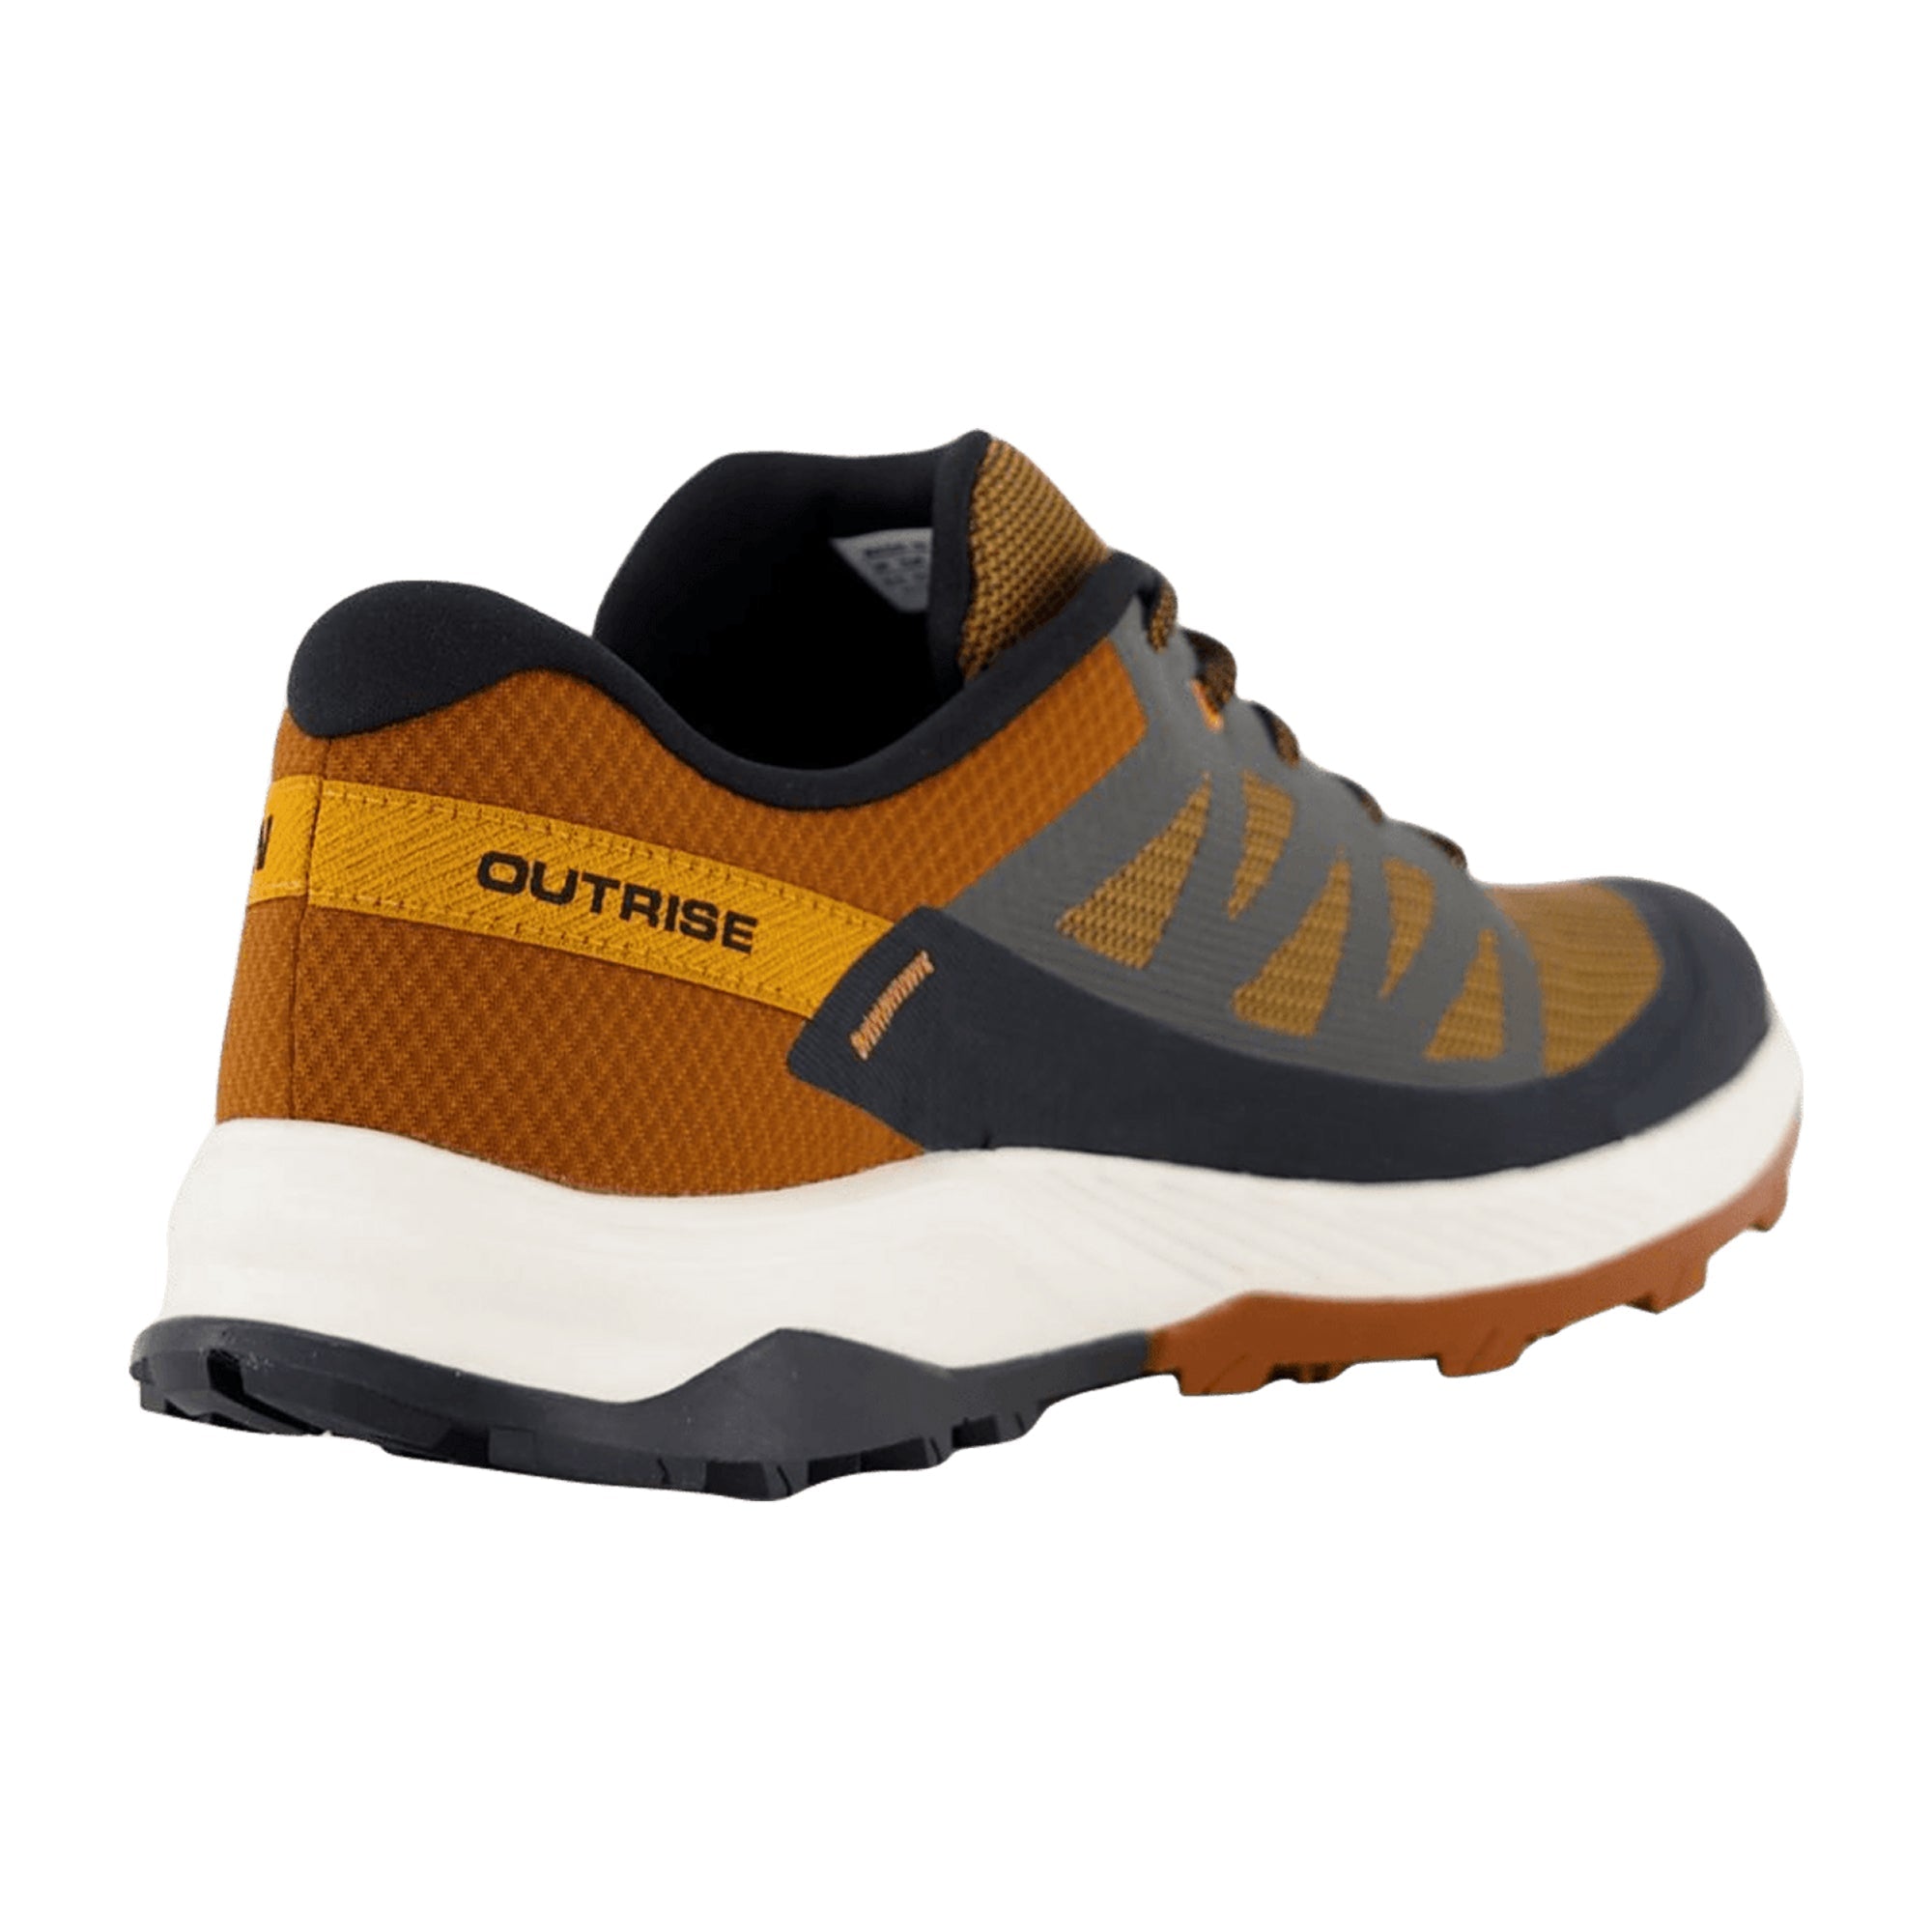 Salomon shoes OUTRISE GTX Belu/Black/ for men, brown